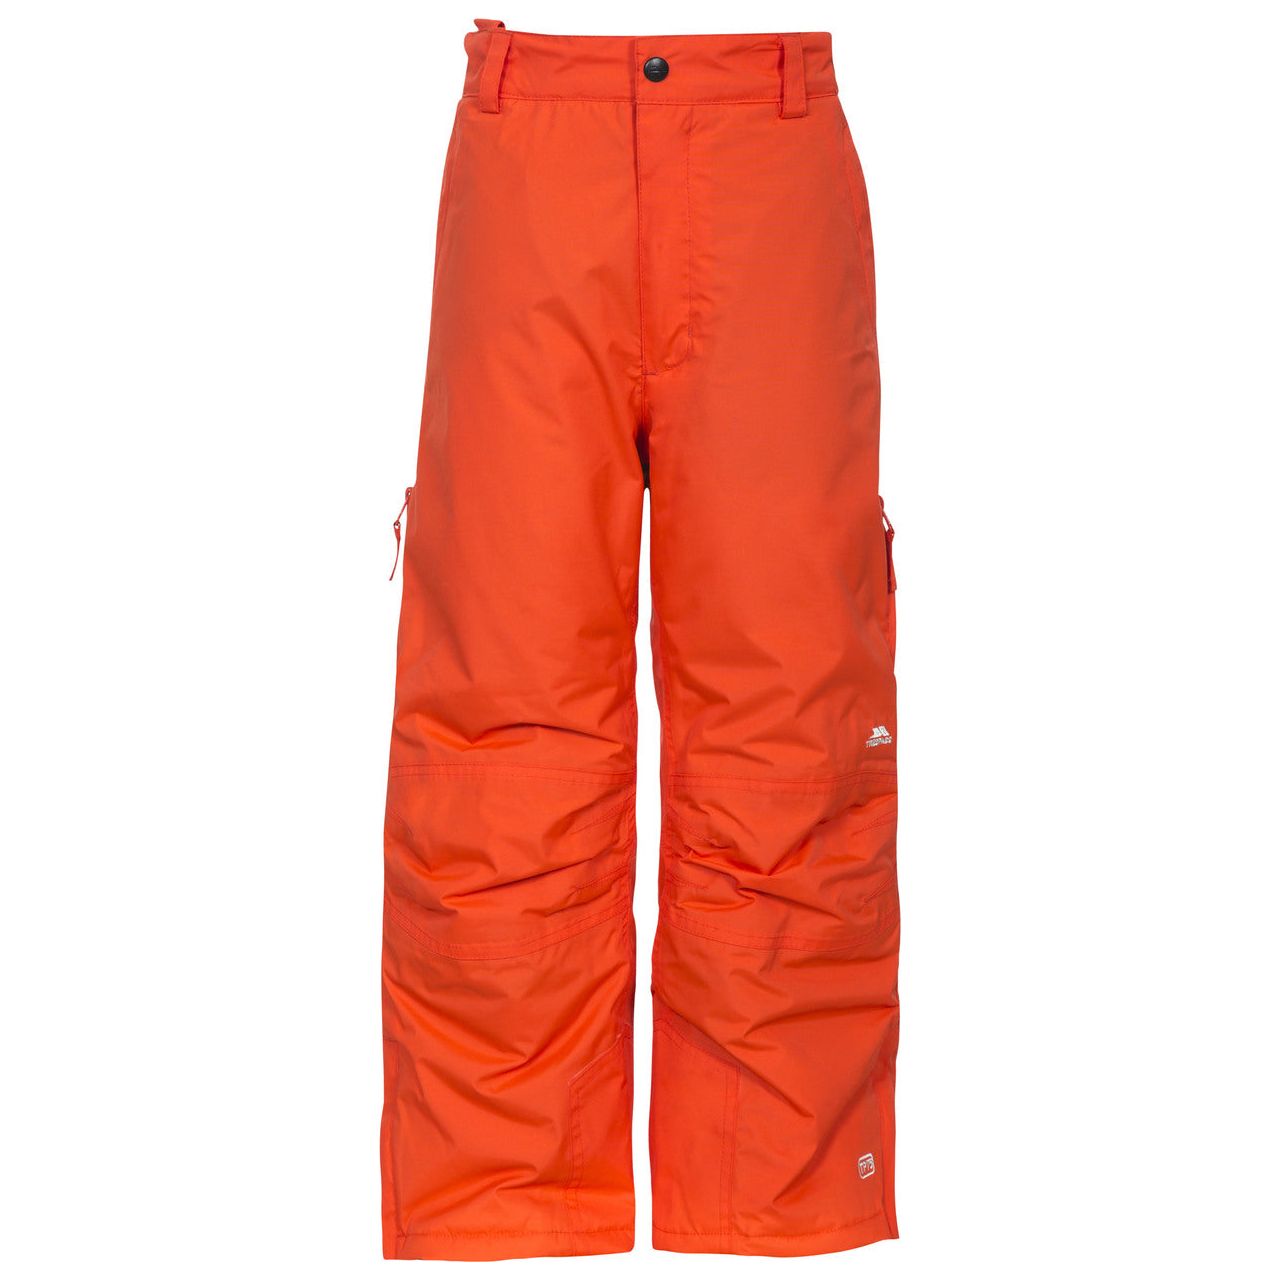 Contamines - Kid's Ski Pants - Hot Orange